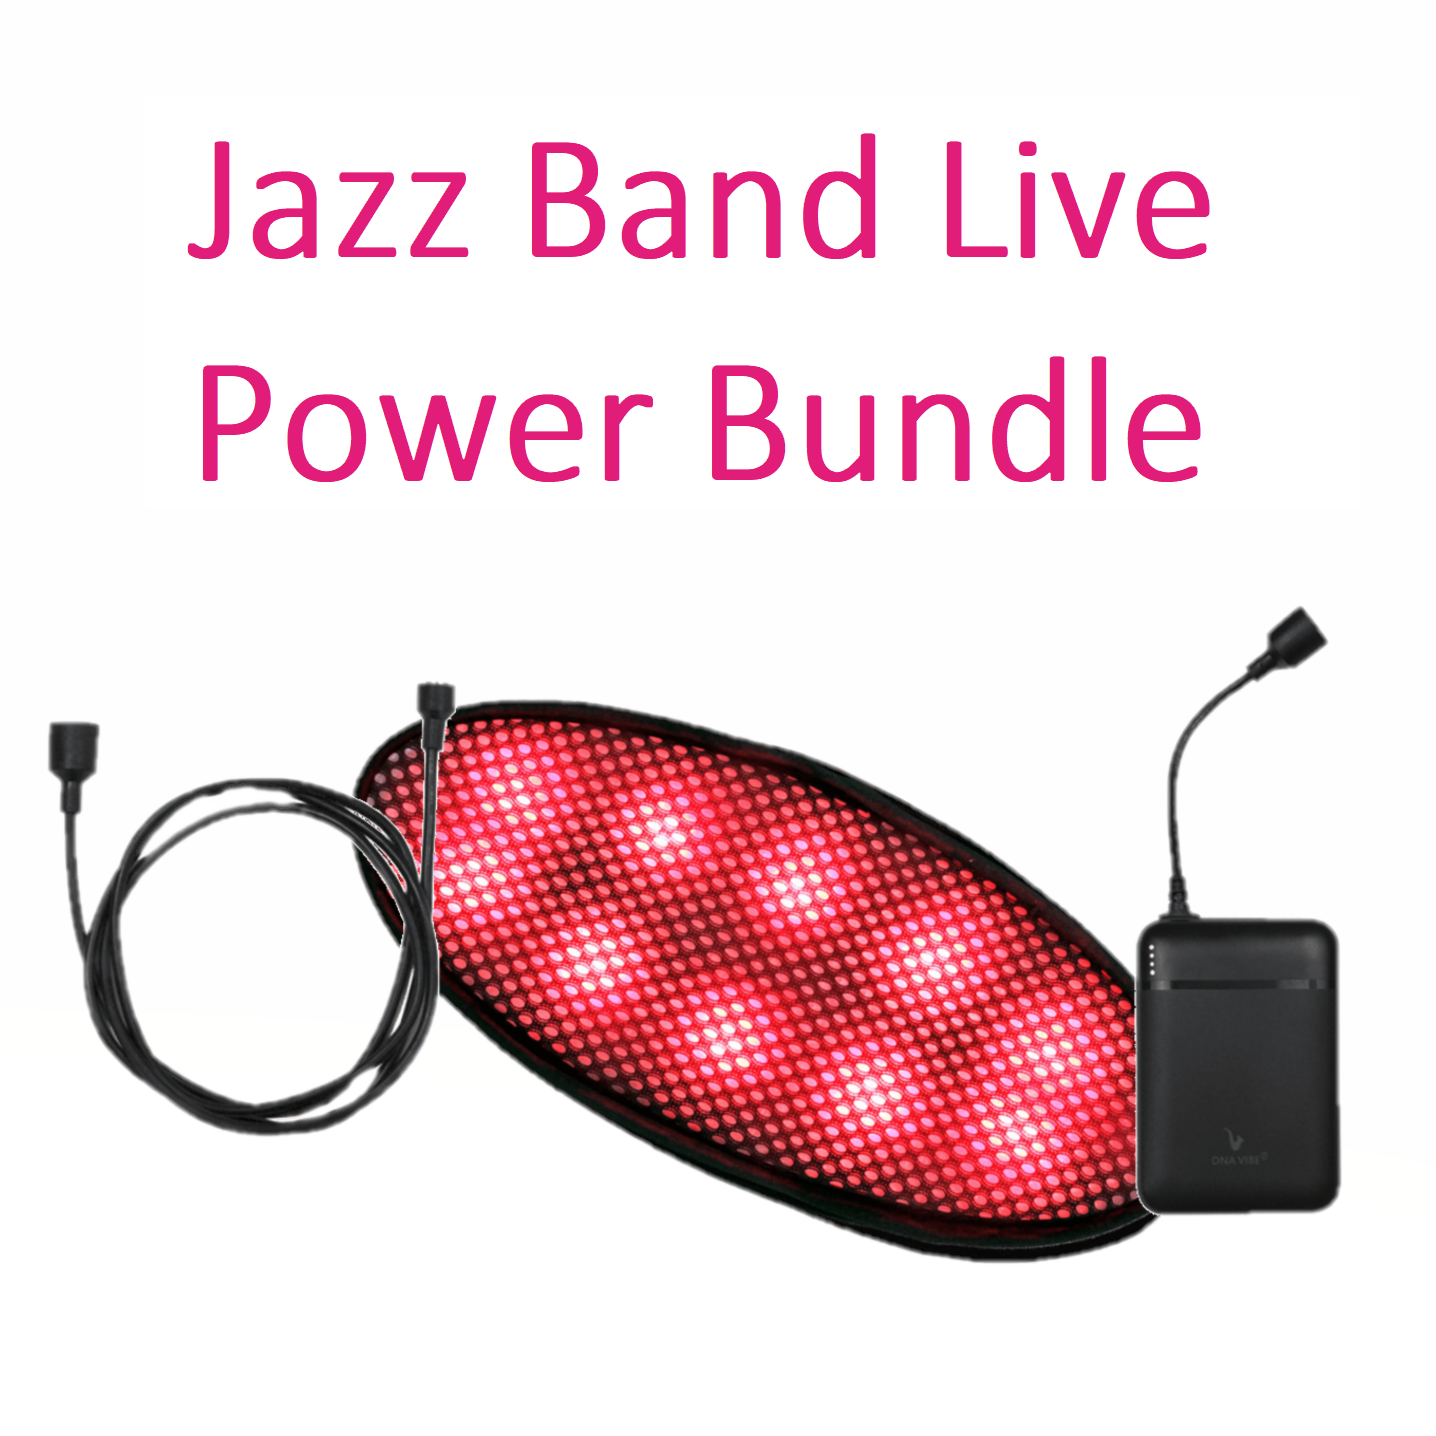 Jazz Band Live Power Bundle - MRK Recharge